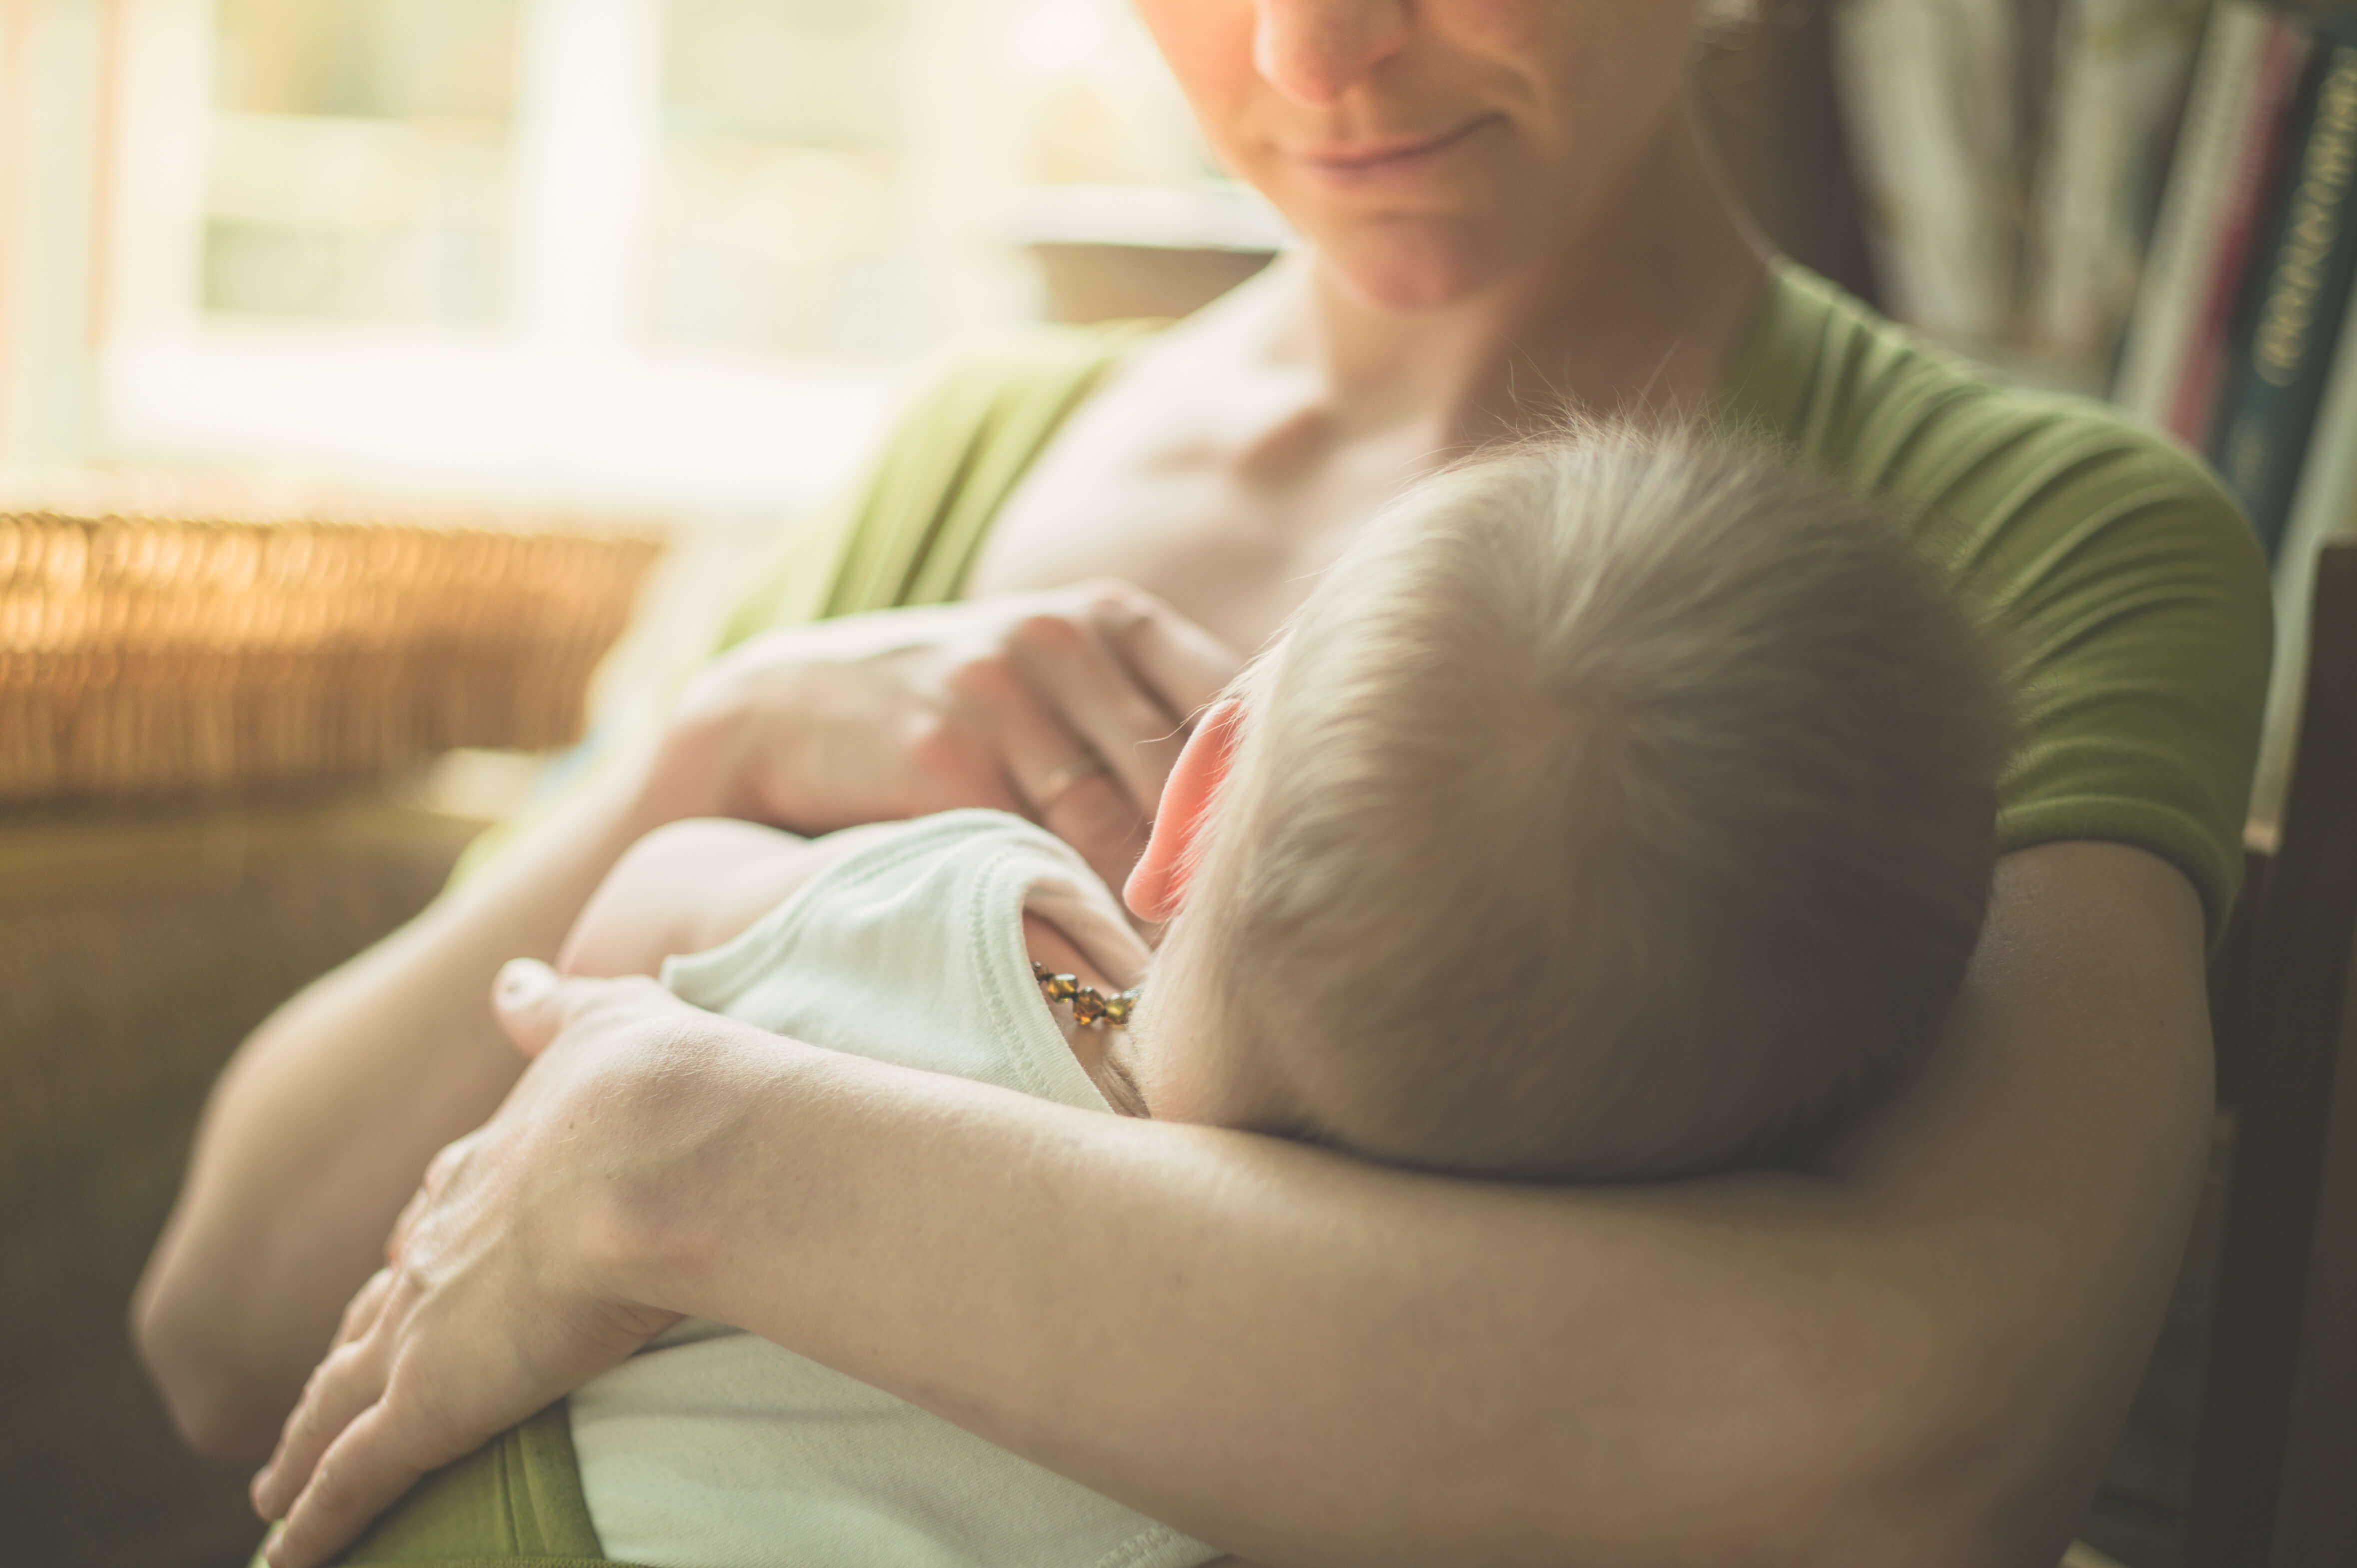 Breastfeeding in public controversy